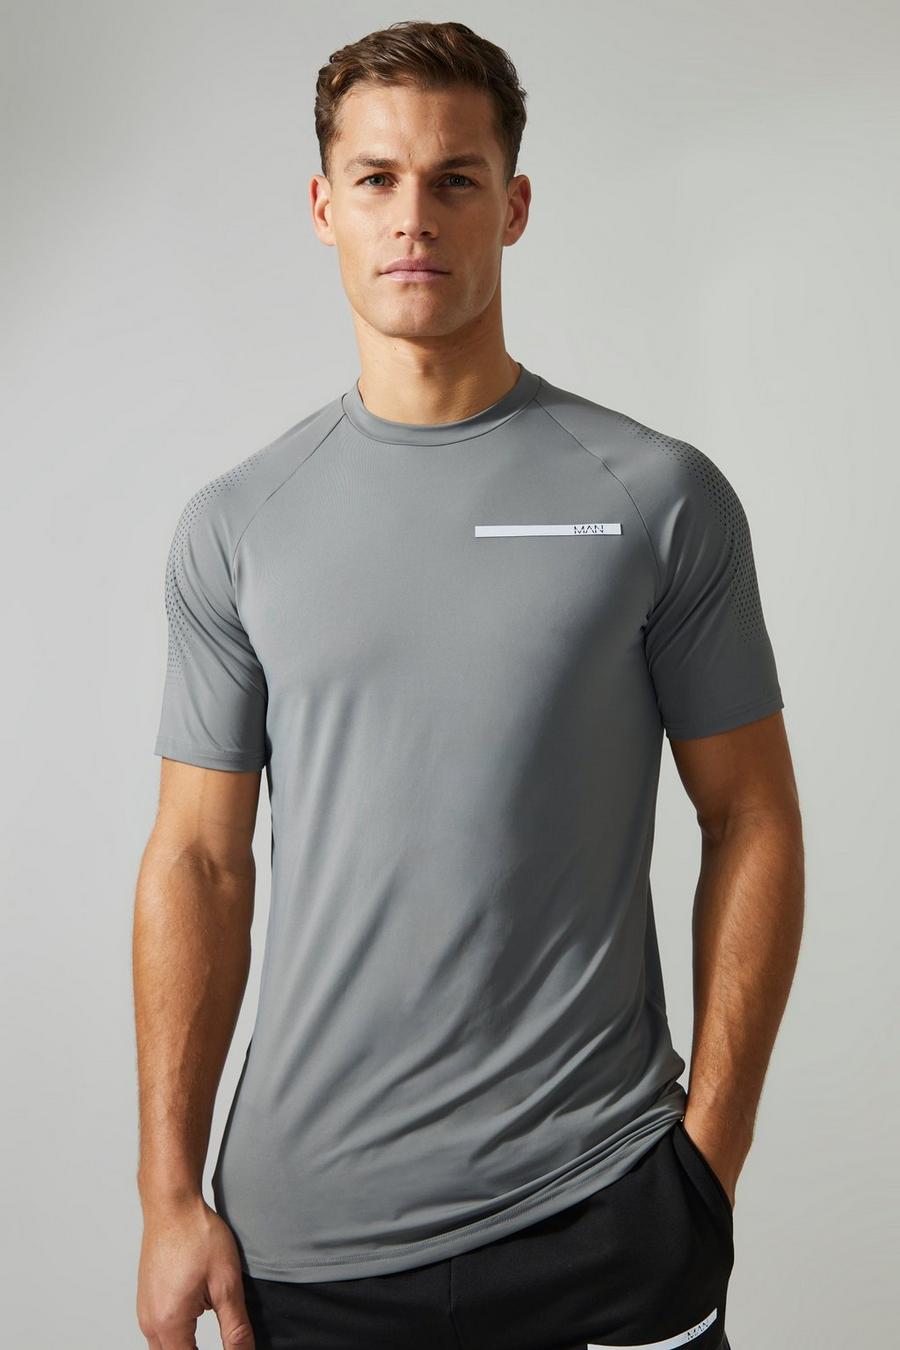 Charcoal gris Tall Man Active Performance Raglan T Shirt